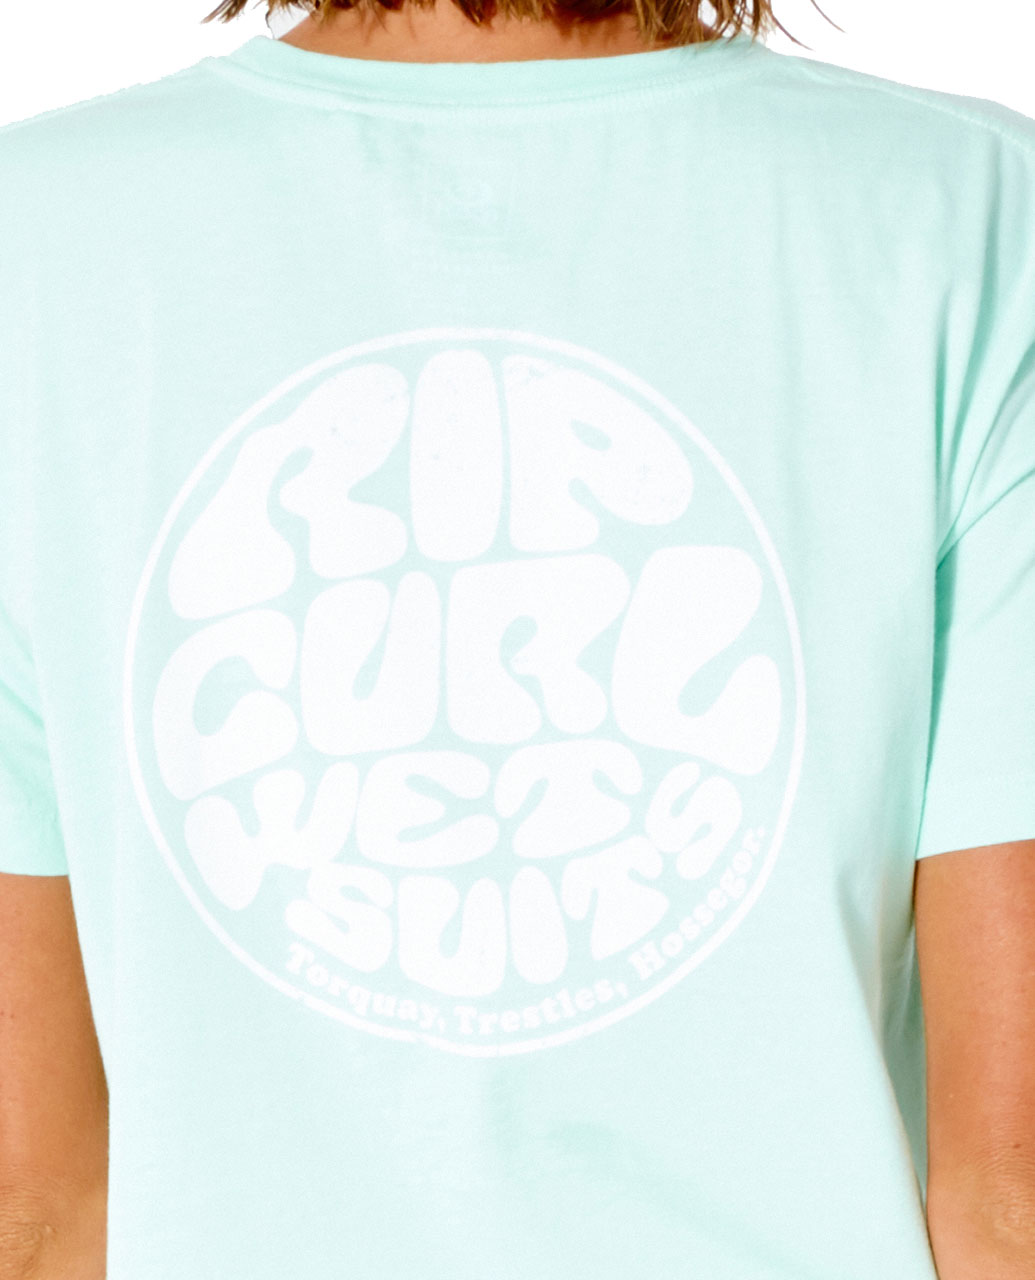 Rip curl WETTIE ICON TEE One aqua Warehouse | II T-Shirt light